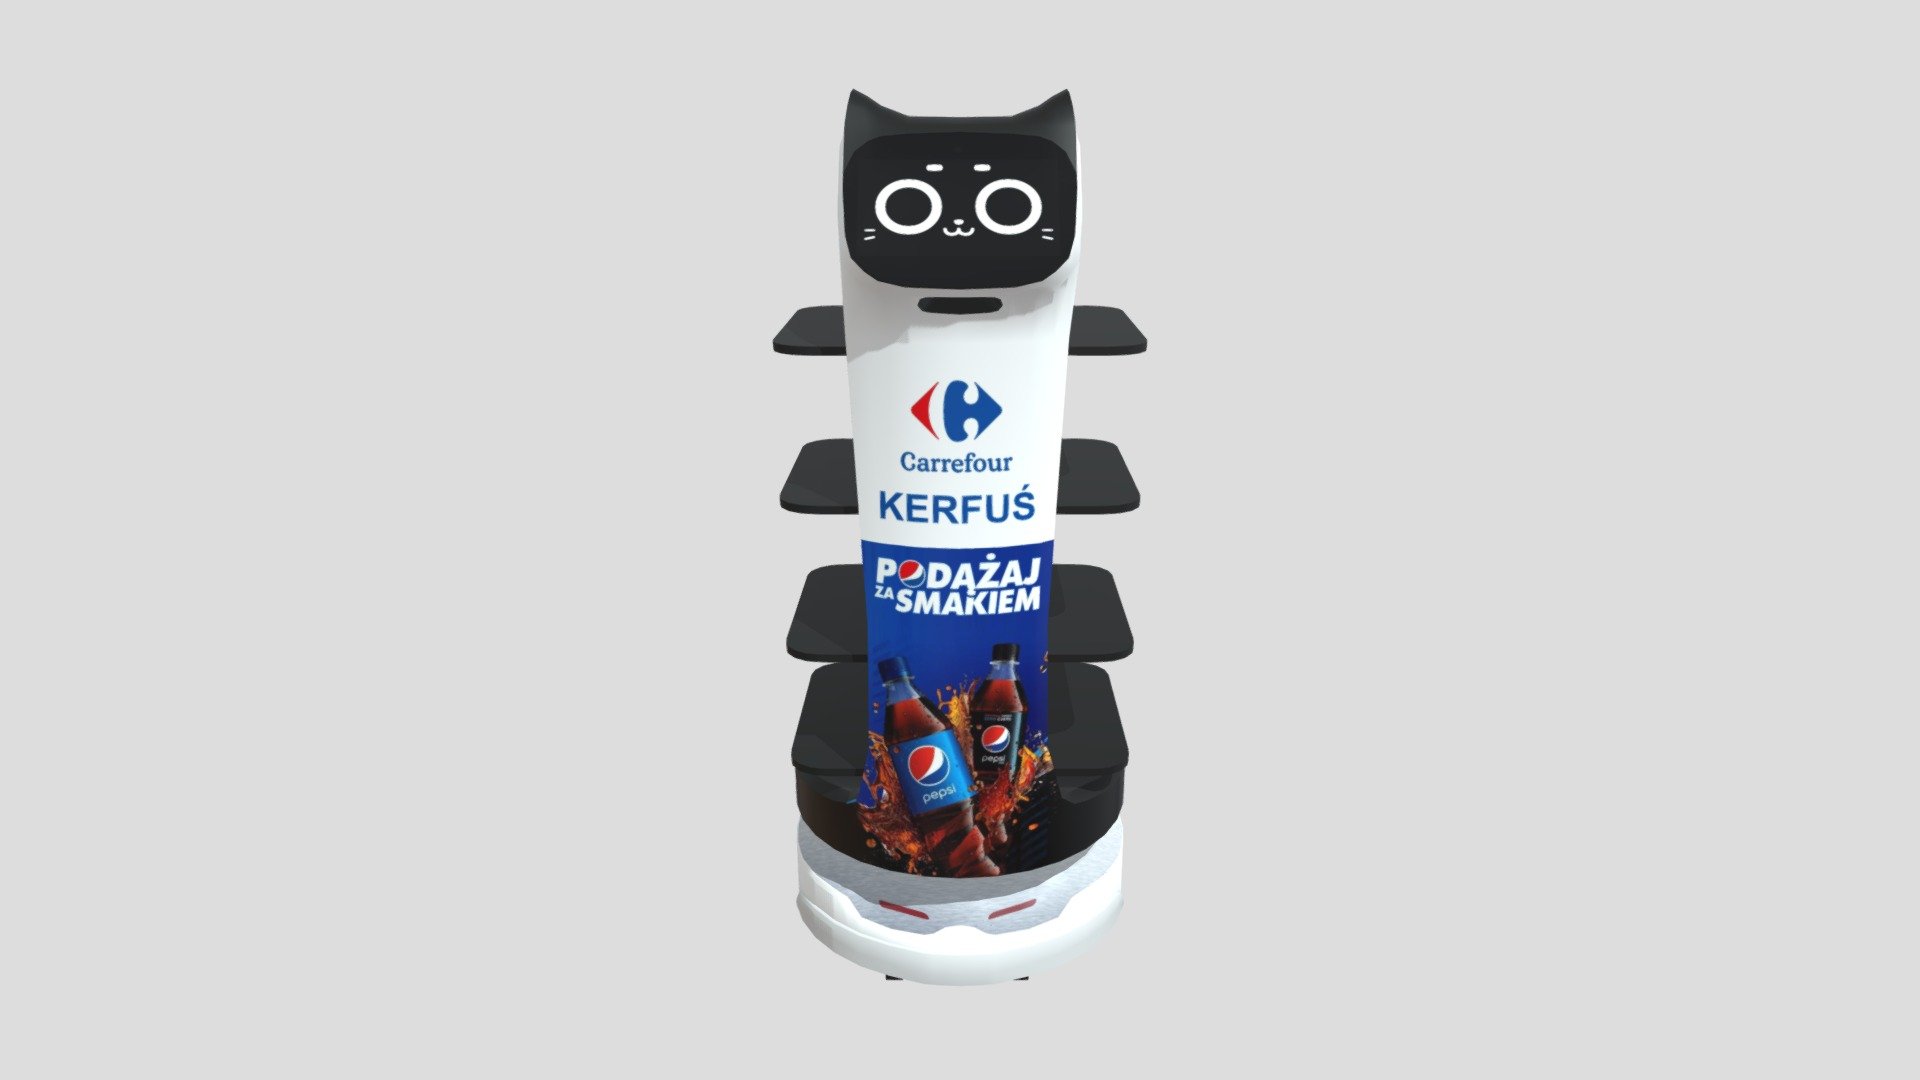 Kerfus rule 34. Kerfus Robot Cat. Kerfuś промо-робот. Kerfuś к34. Kerfus r23.